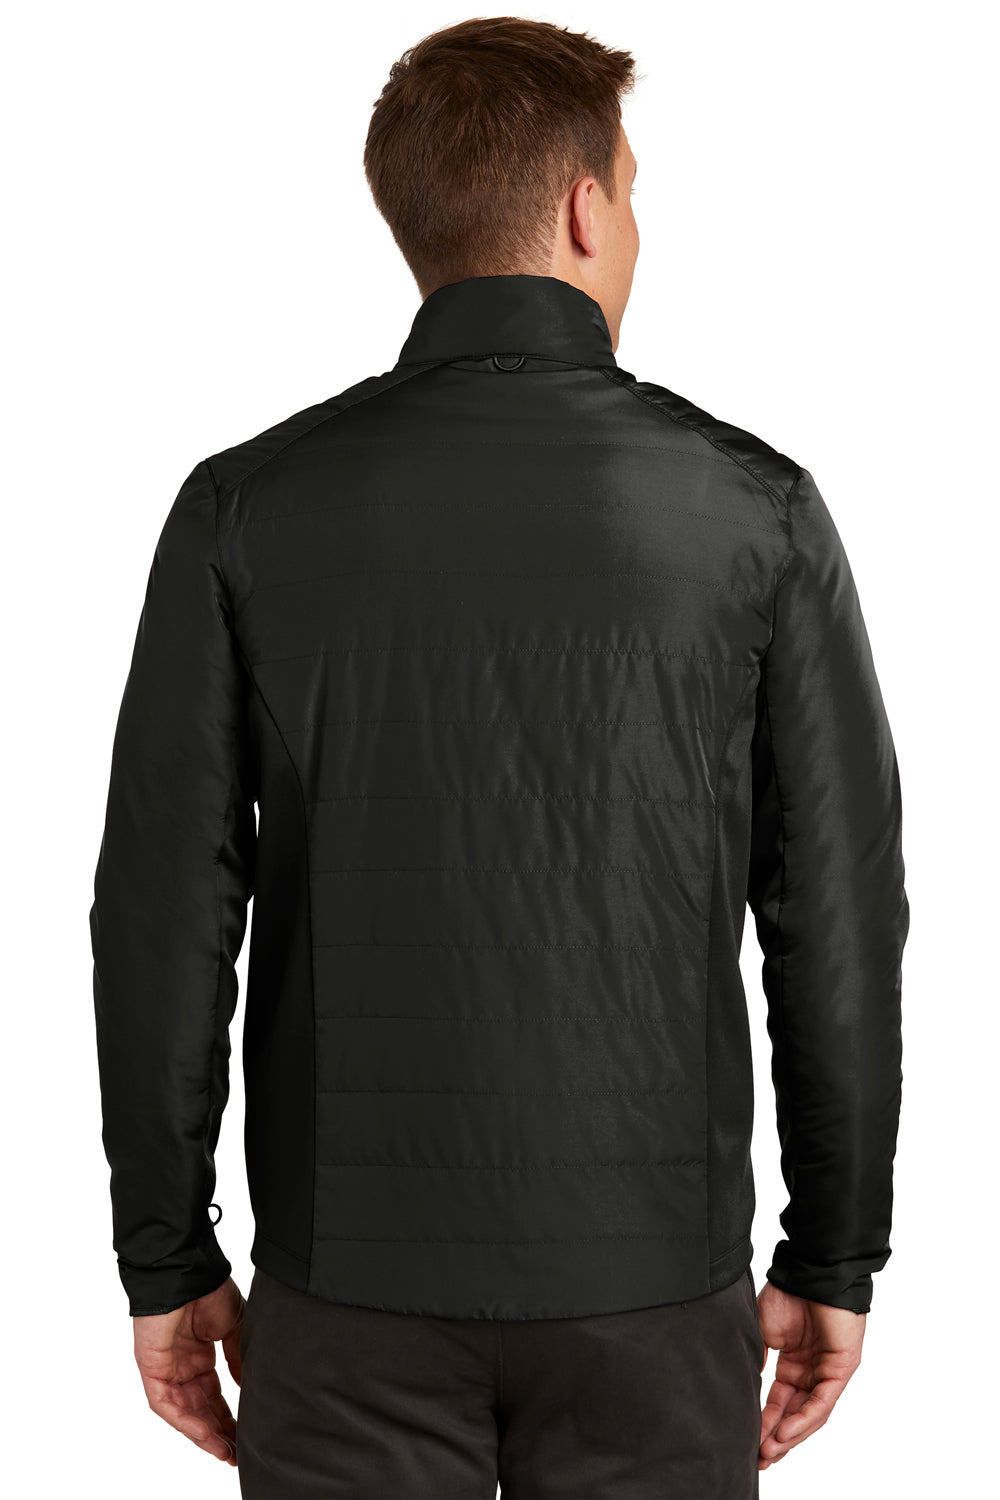 Port Authority J902 Mens Collective Wind & Water Resistant Full Zip Jacket Black Back